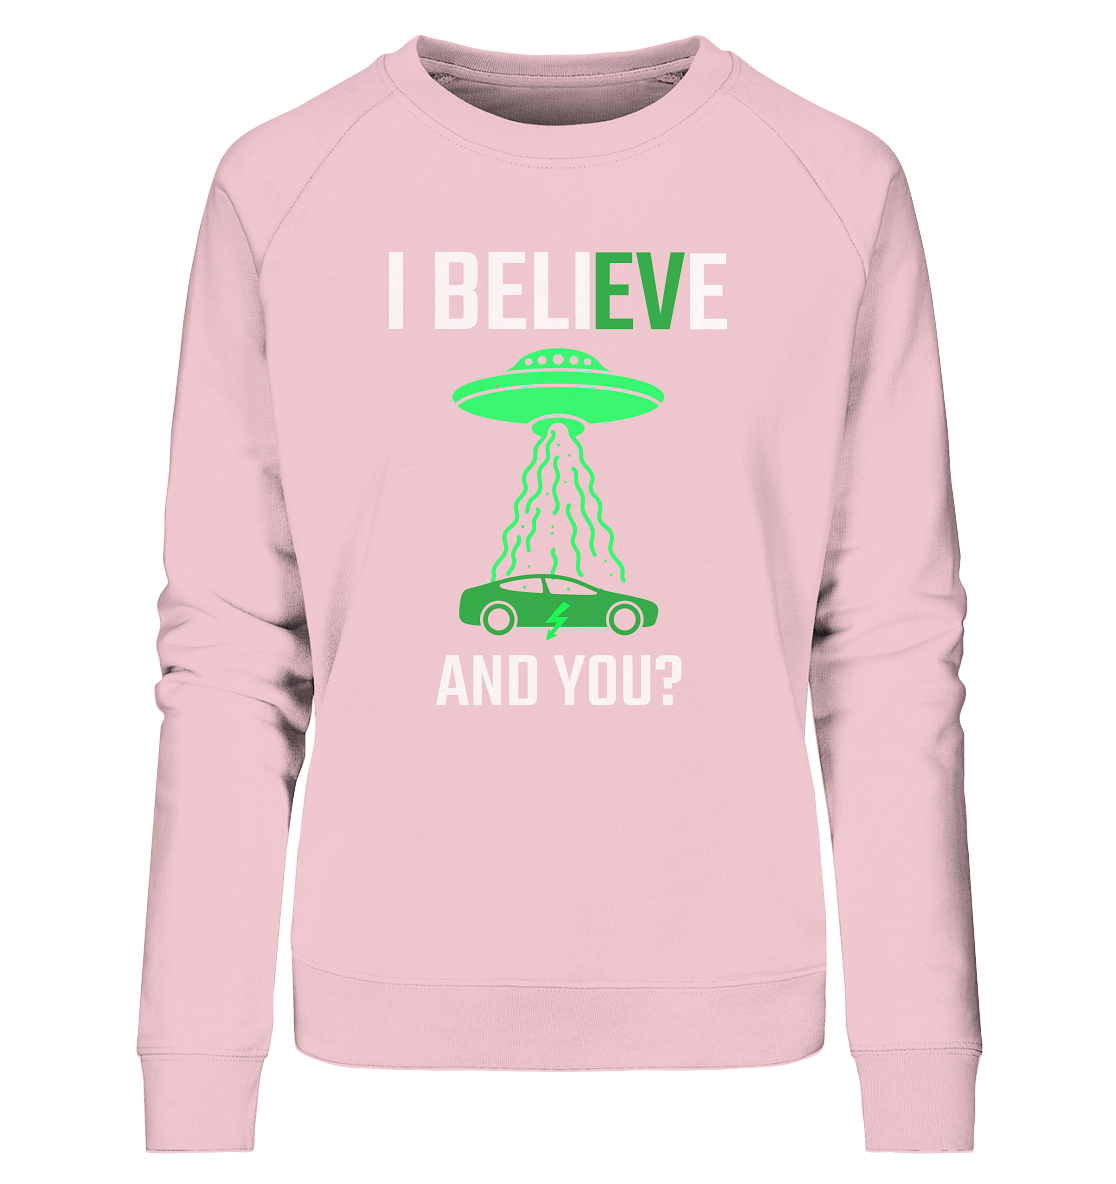 I believe ORGANIC - Ladies Organic Sweatshirt